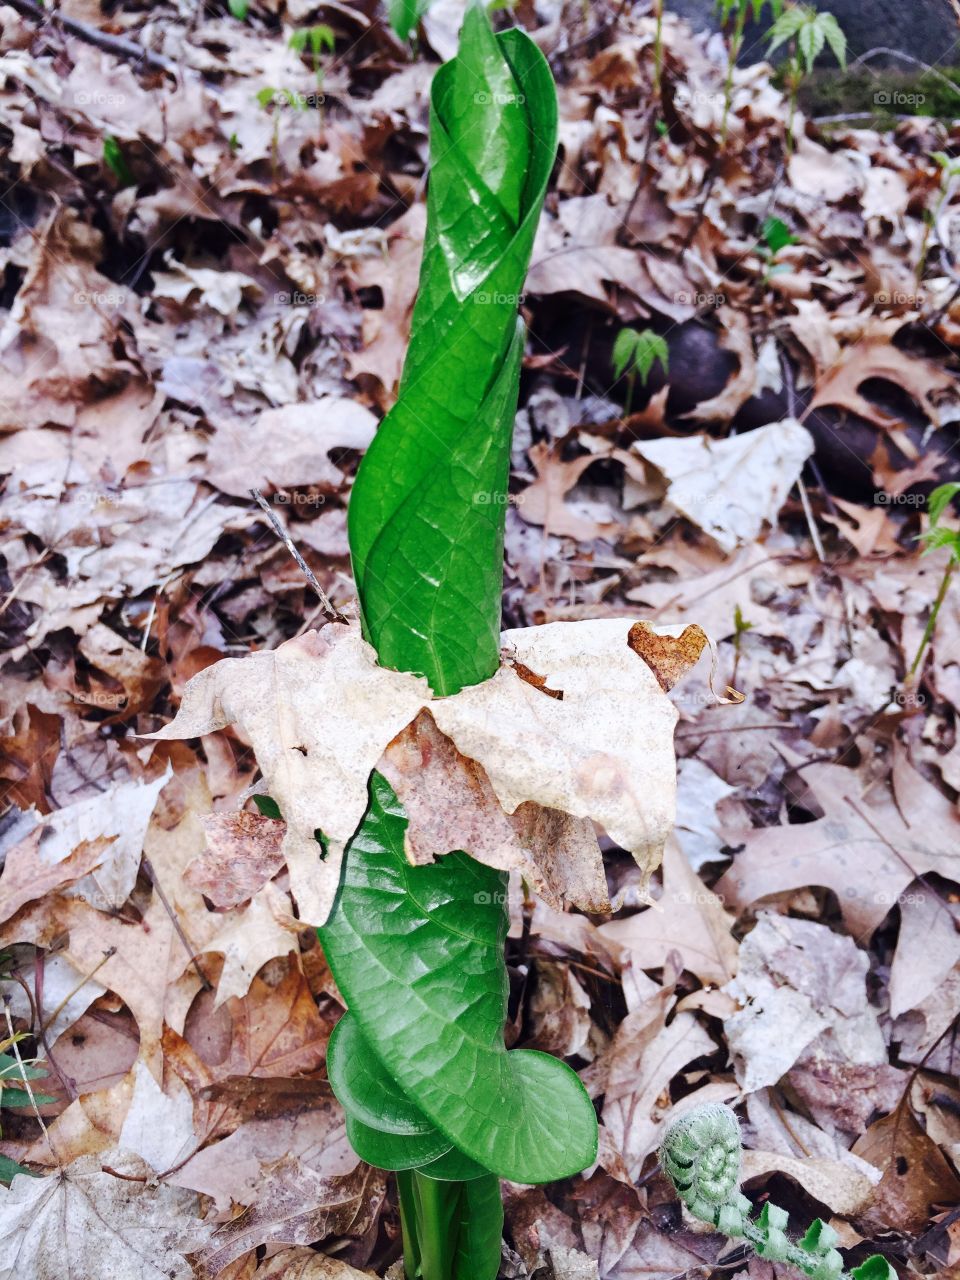 Skunk cabbage growing through a leaf 